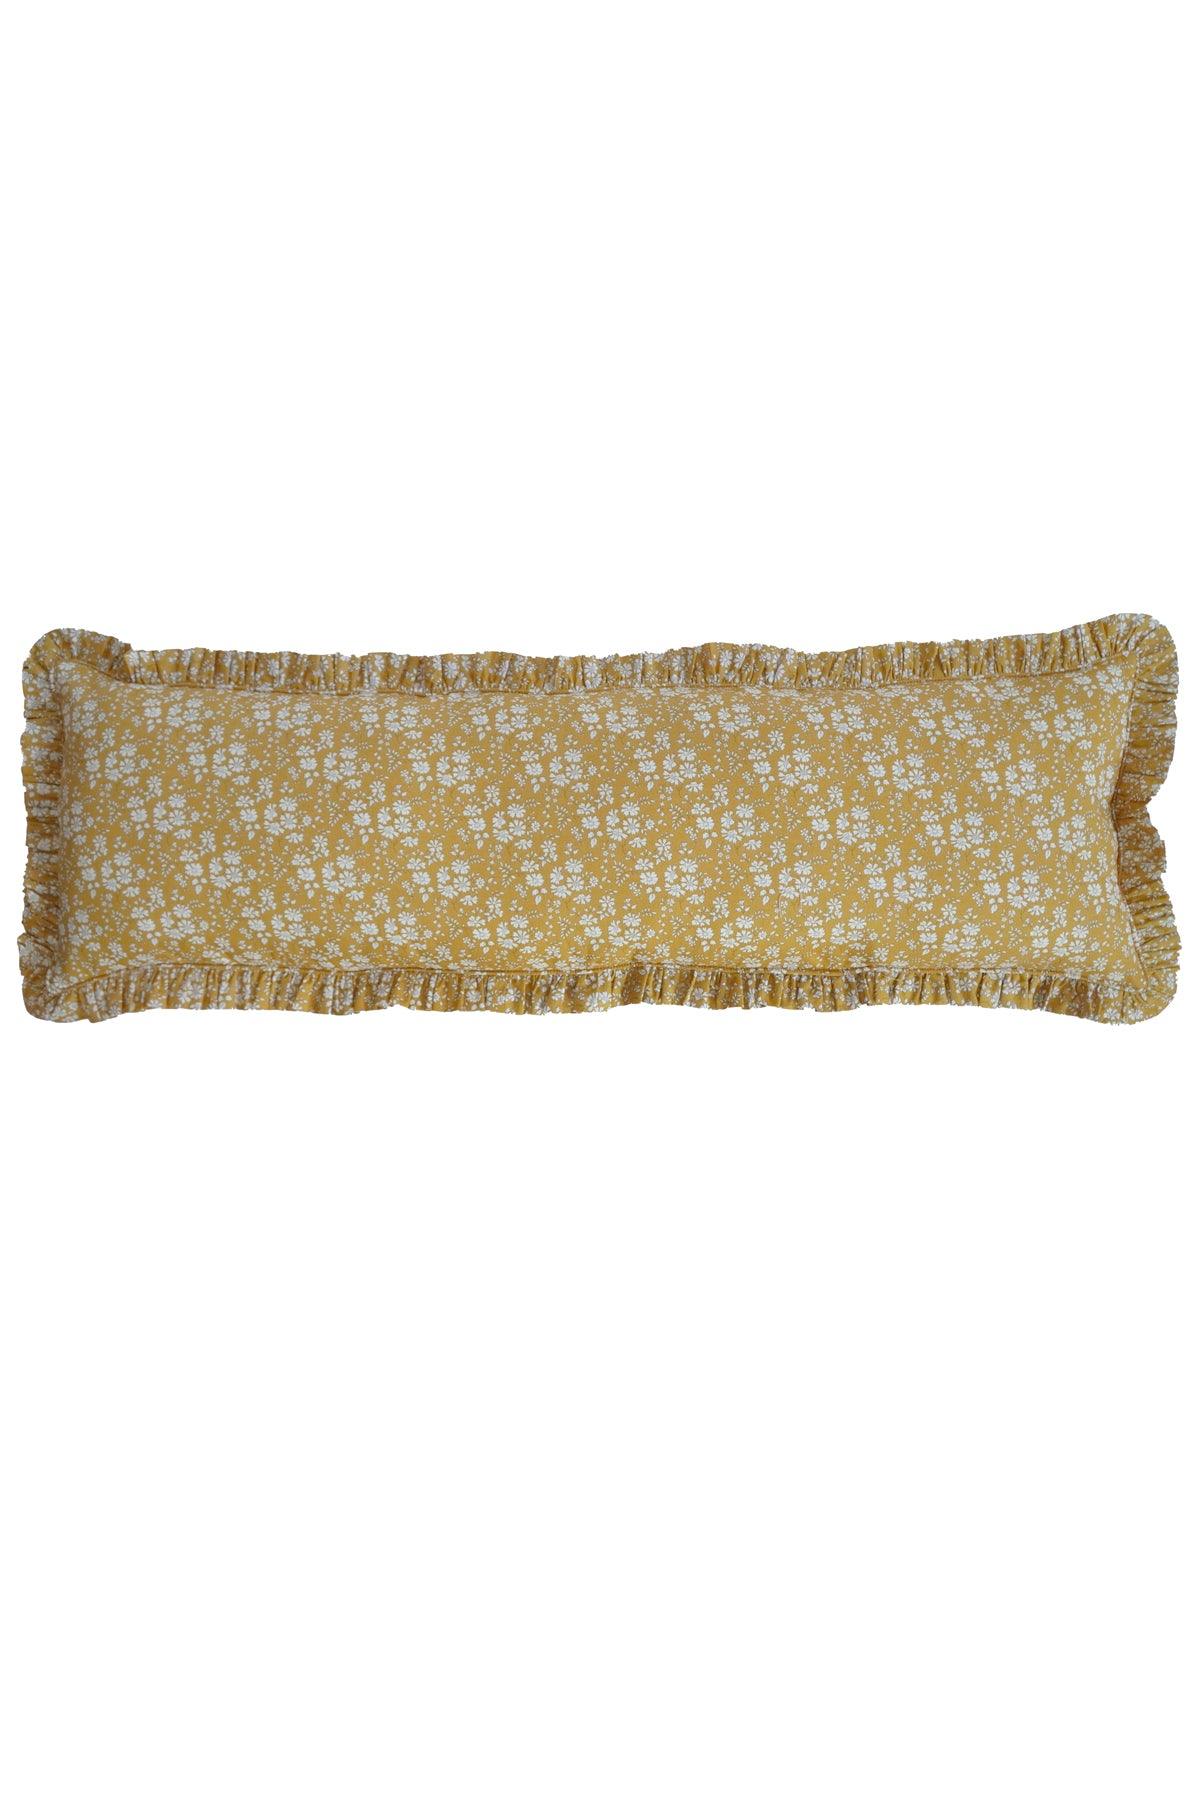 Ruffle Bolster Lumbar Cushion made with Liberty Fabric CAPEL MUSTARD - Coco & Wolf